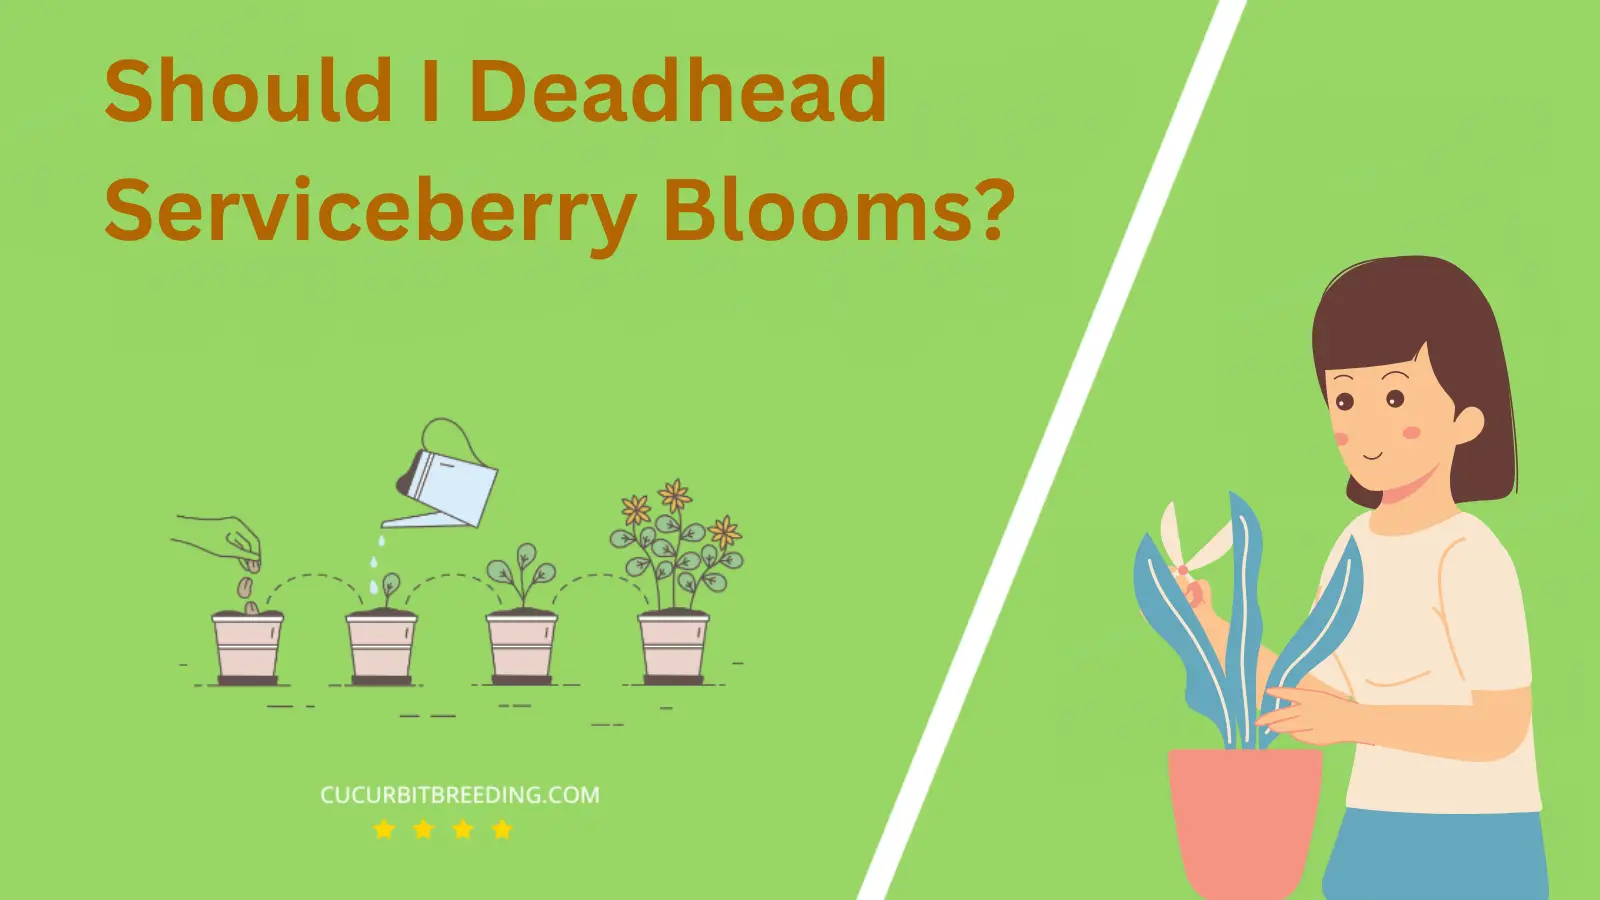 Should I Deadhead Serviceberry Blooms?